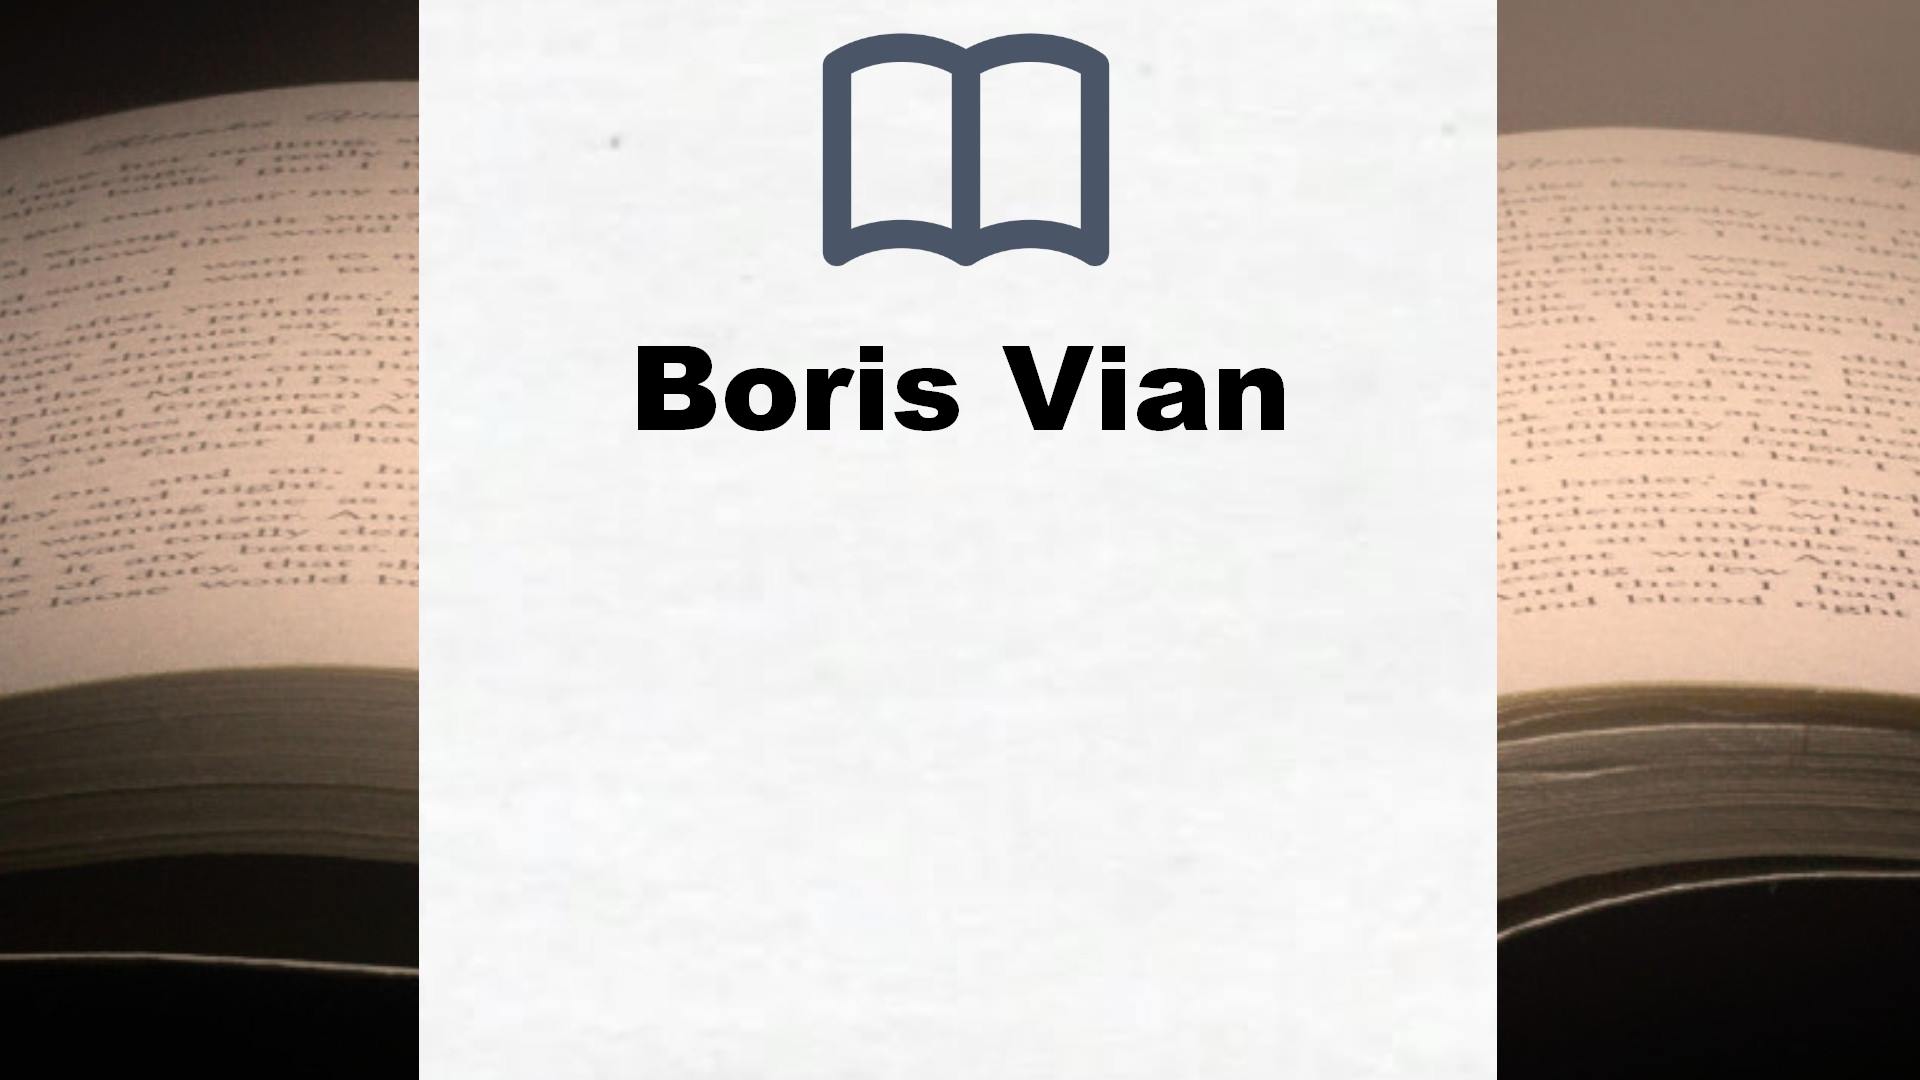 Libros Boris Vian